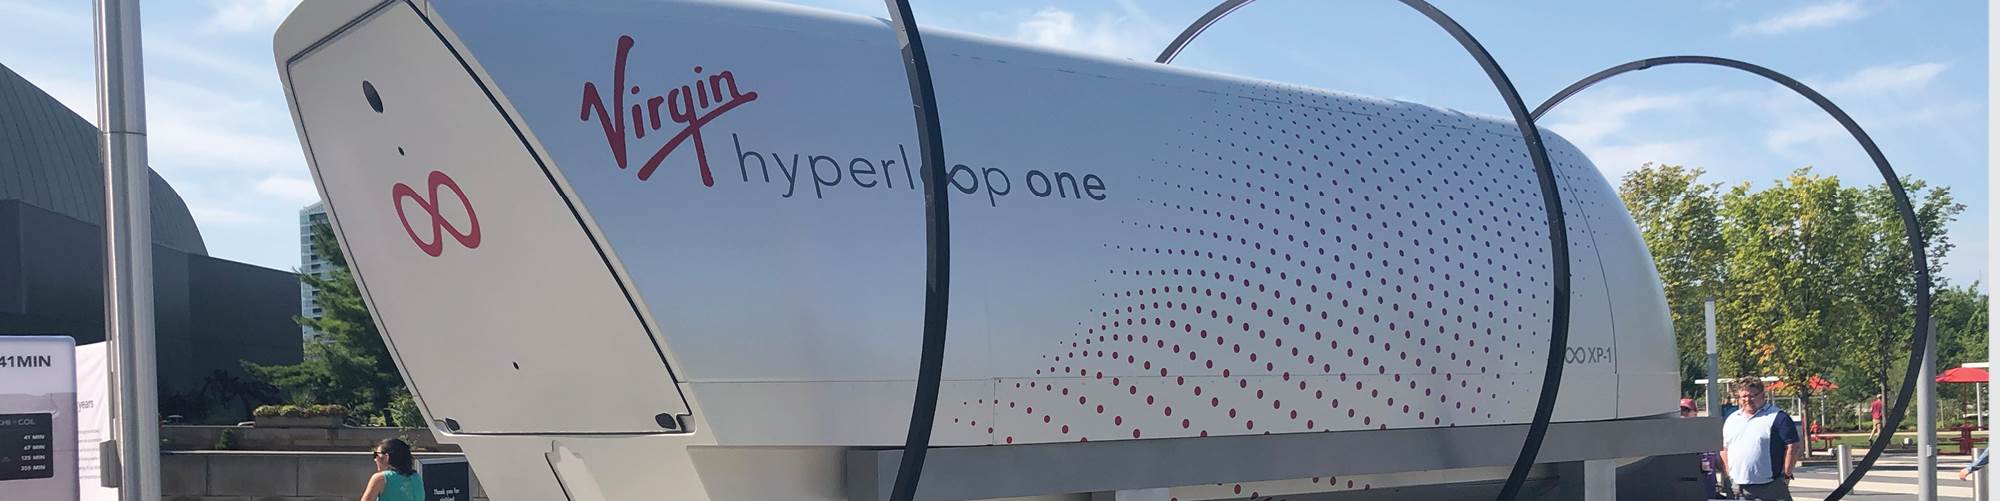 Virgin Hyperloop One’s XP-1 test pod on display at COSI (Columbus, Ohio, U.S.).